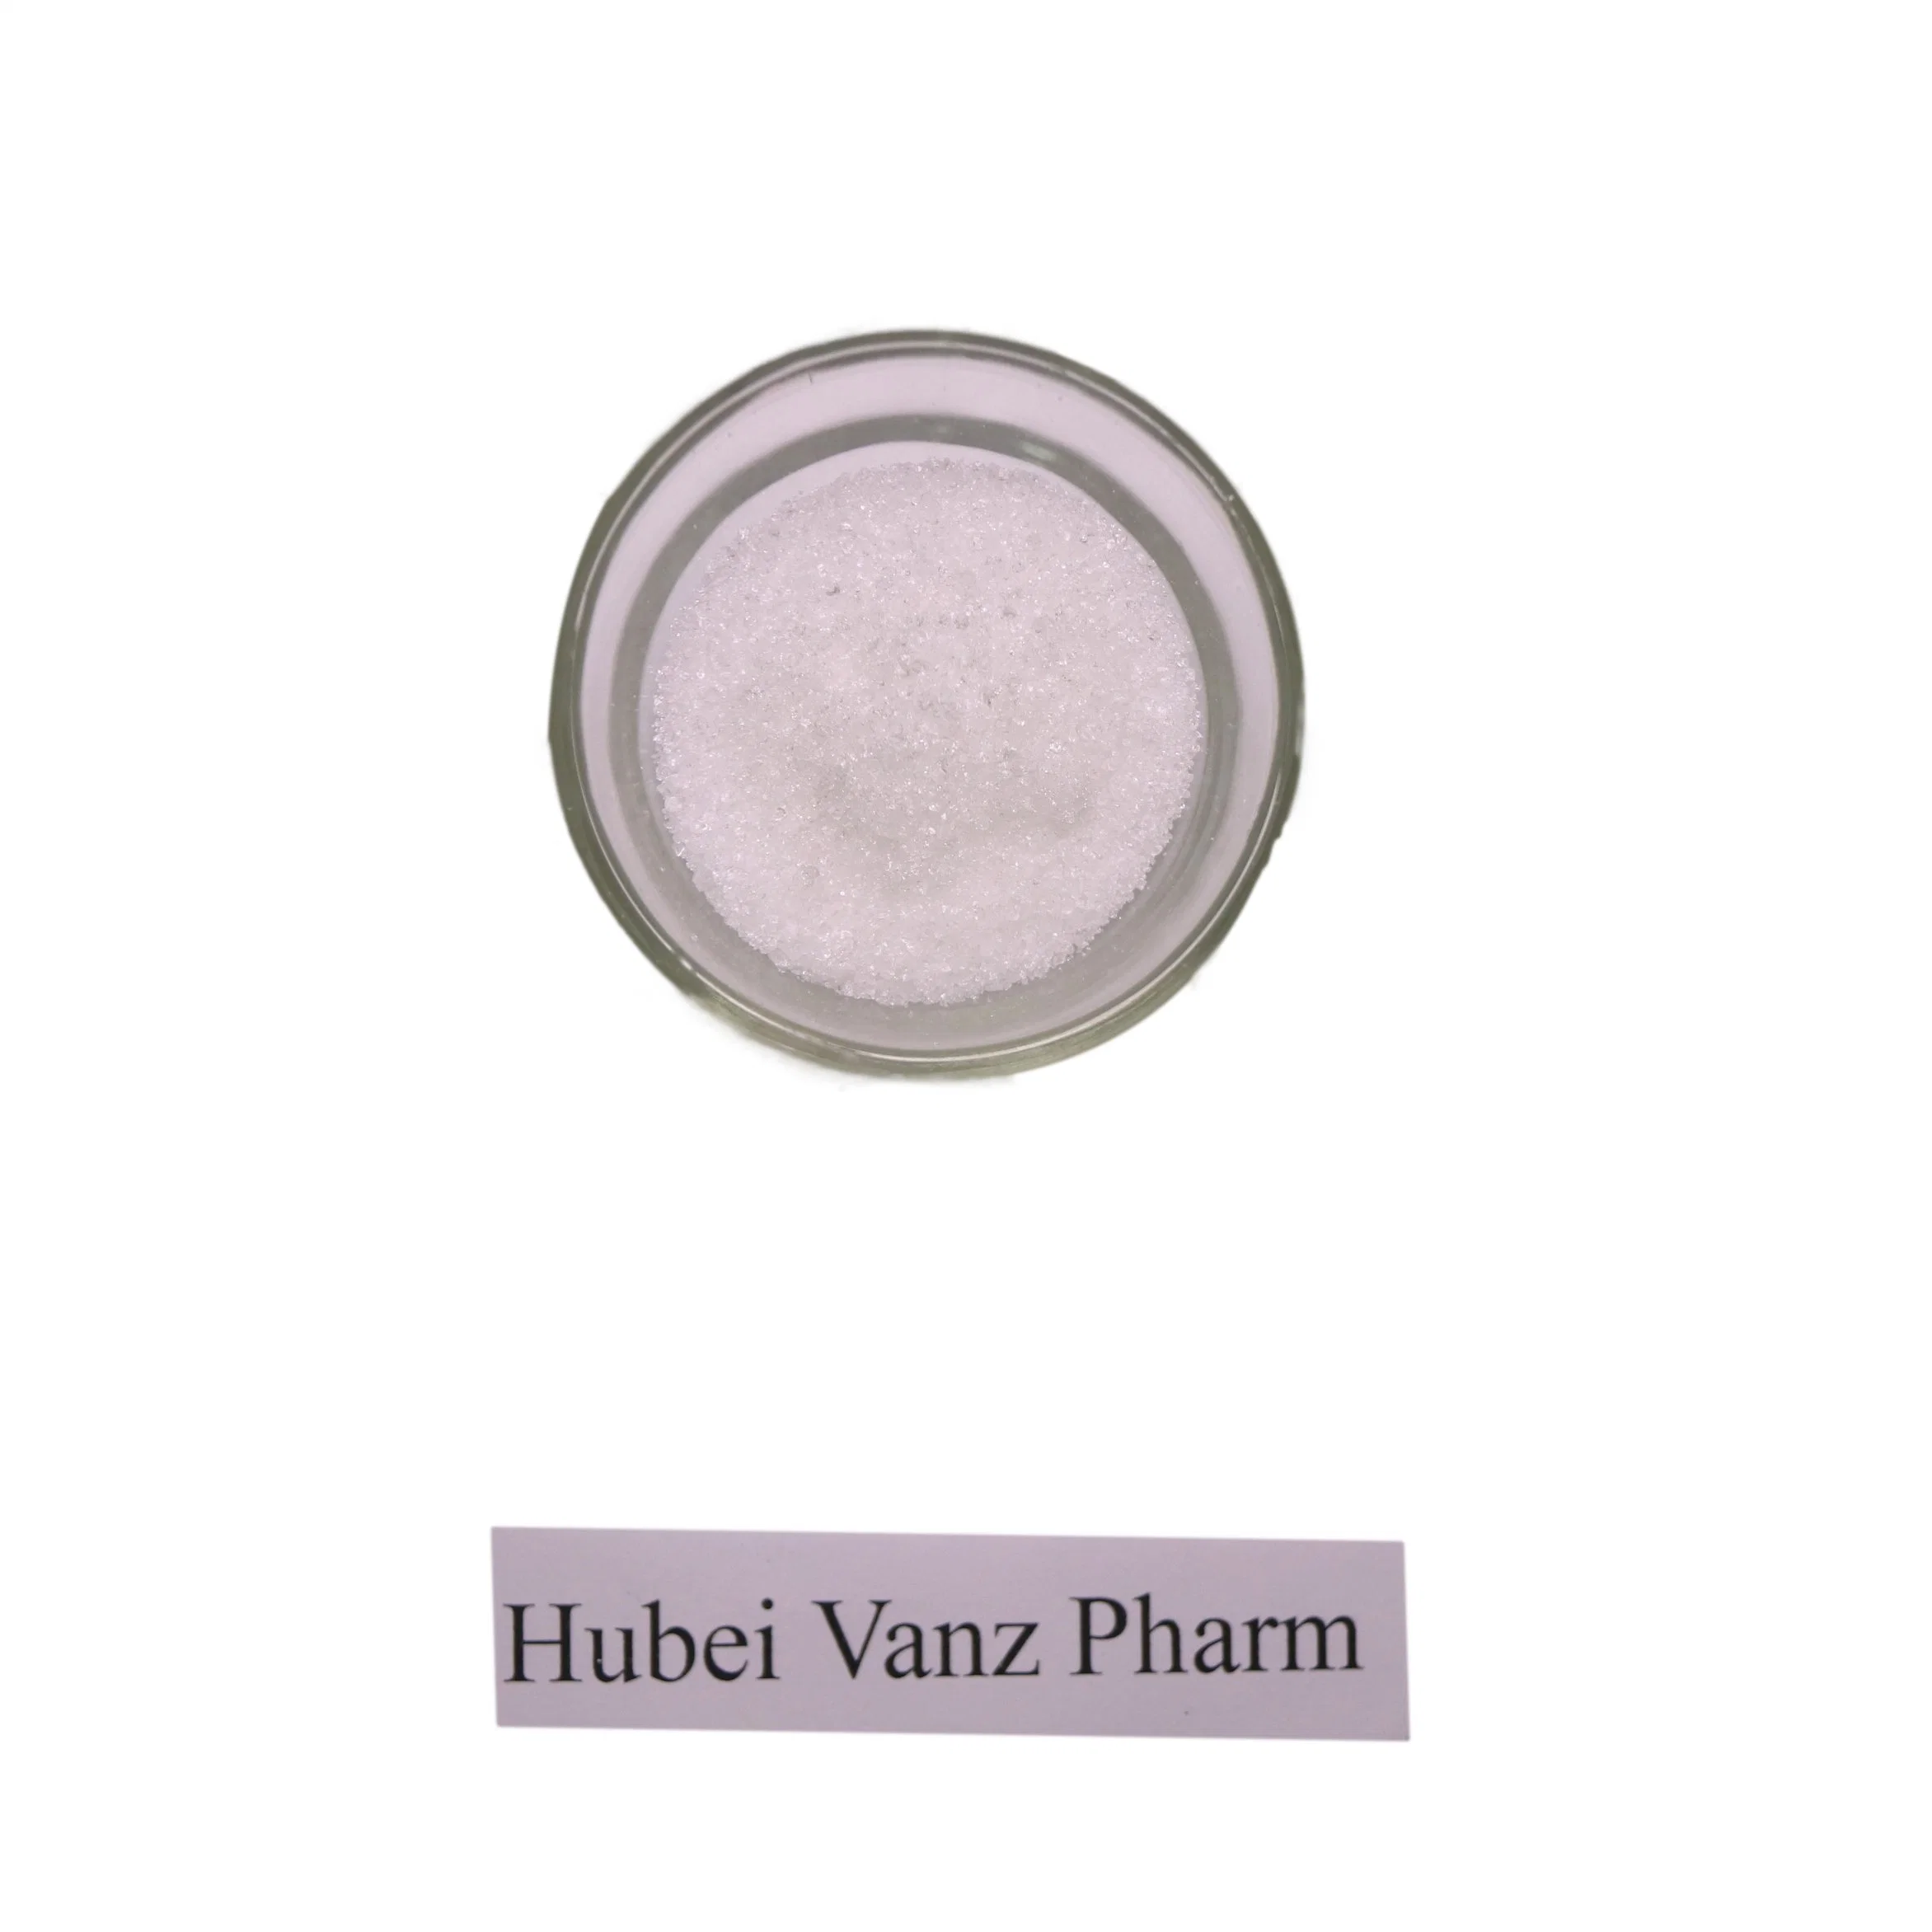 Vanzpharm Manfuacture Organic Intermediates 1, 4-Dibromonaphthalene CAS 83-53-4